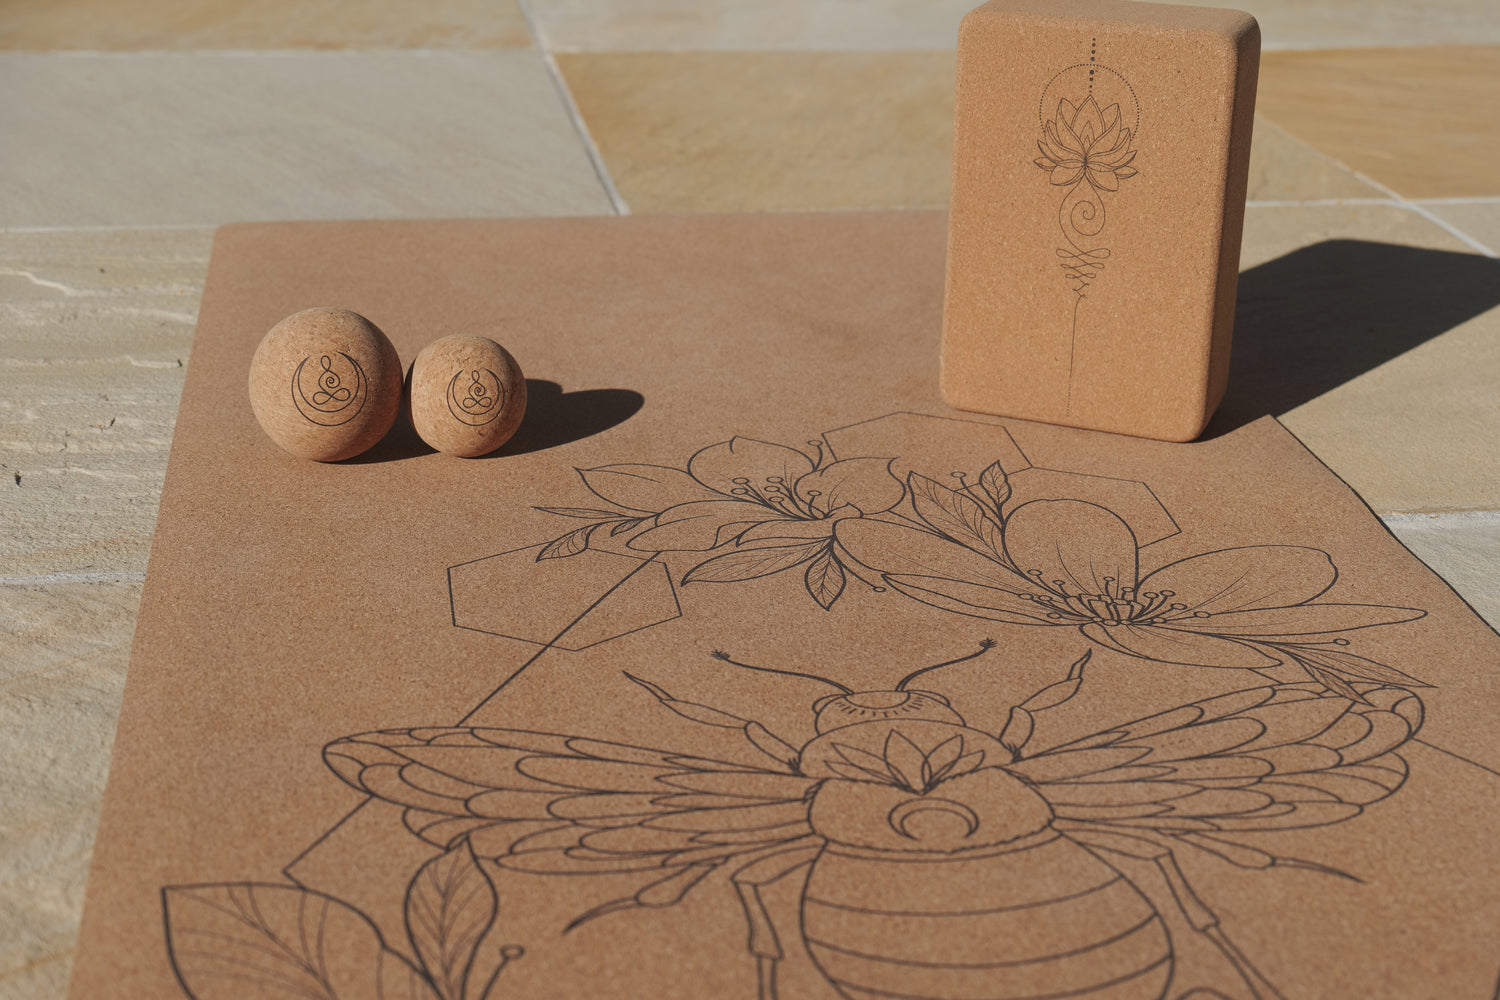 Bee cork and natural rubber yoga mat + unalome lotus cork block + OGI NEST original cork massage balls.